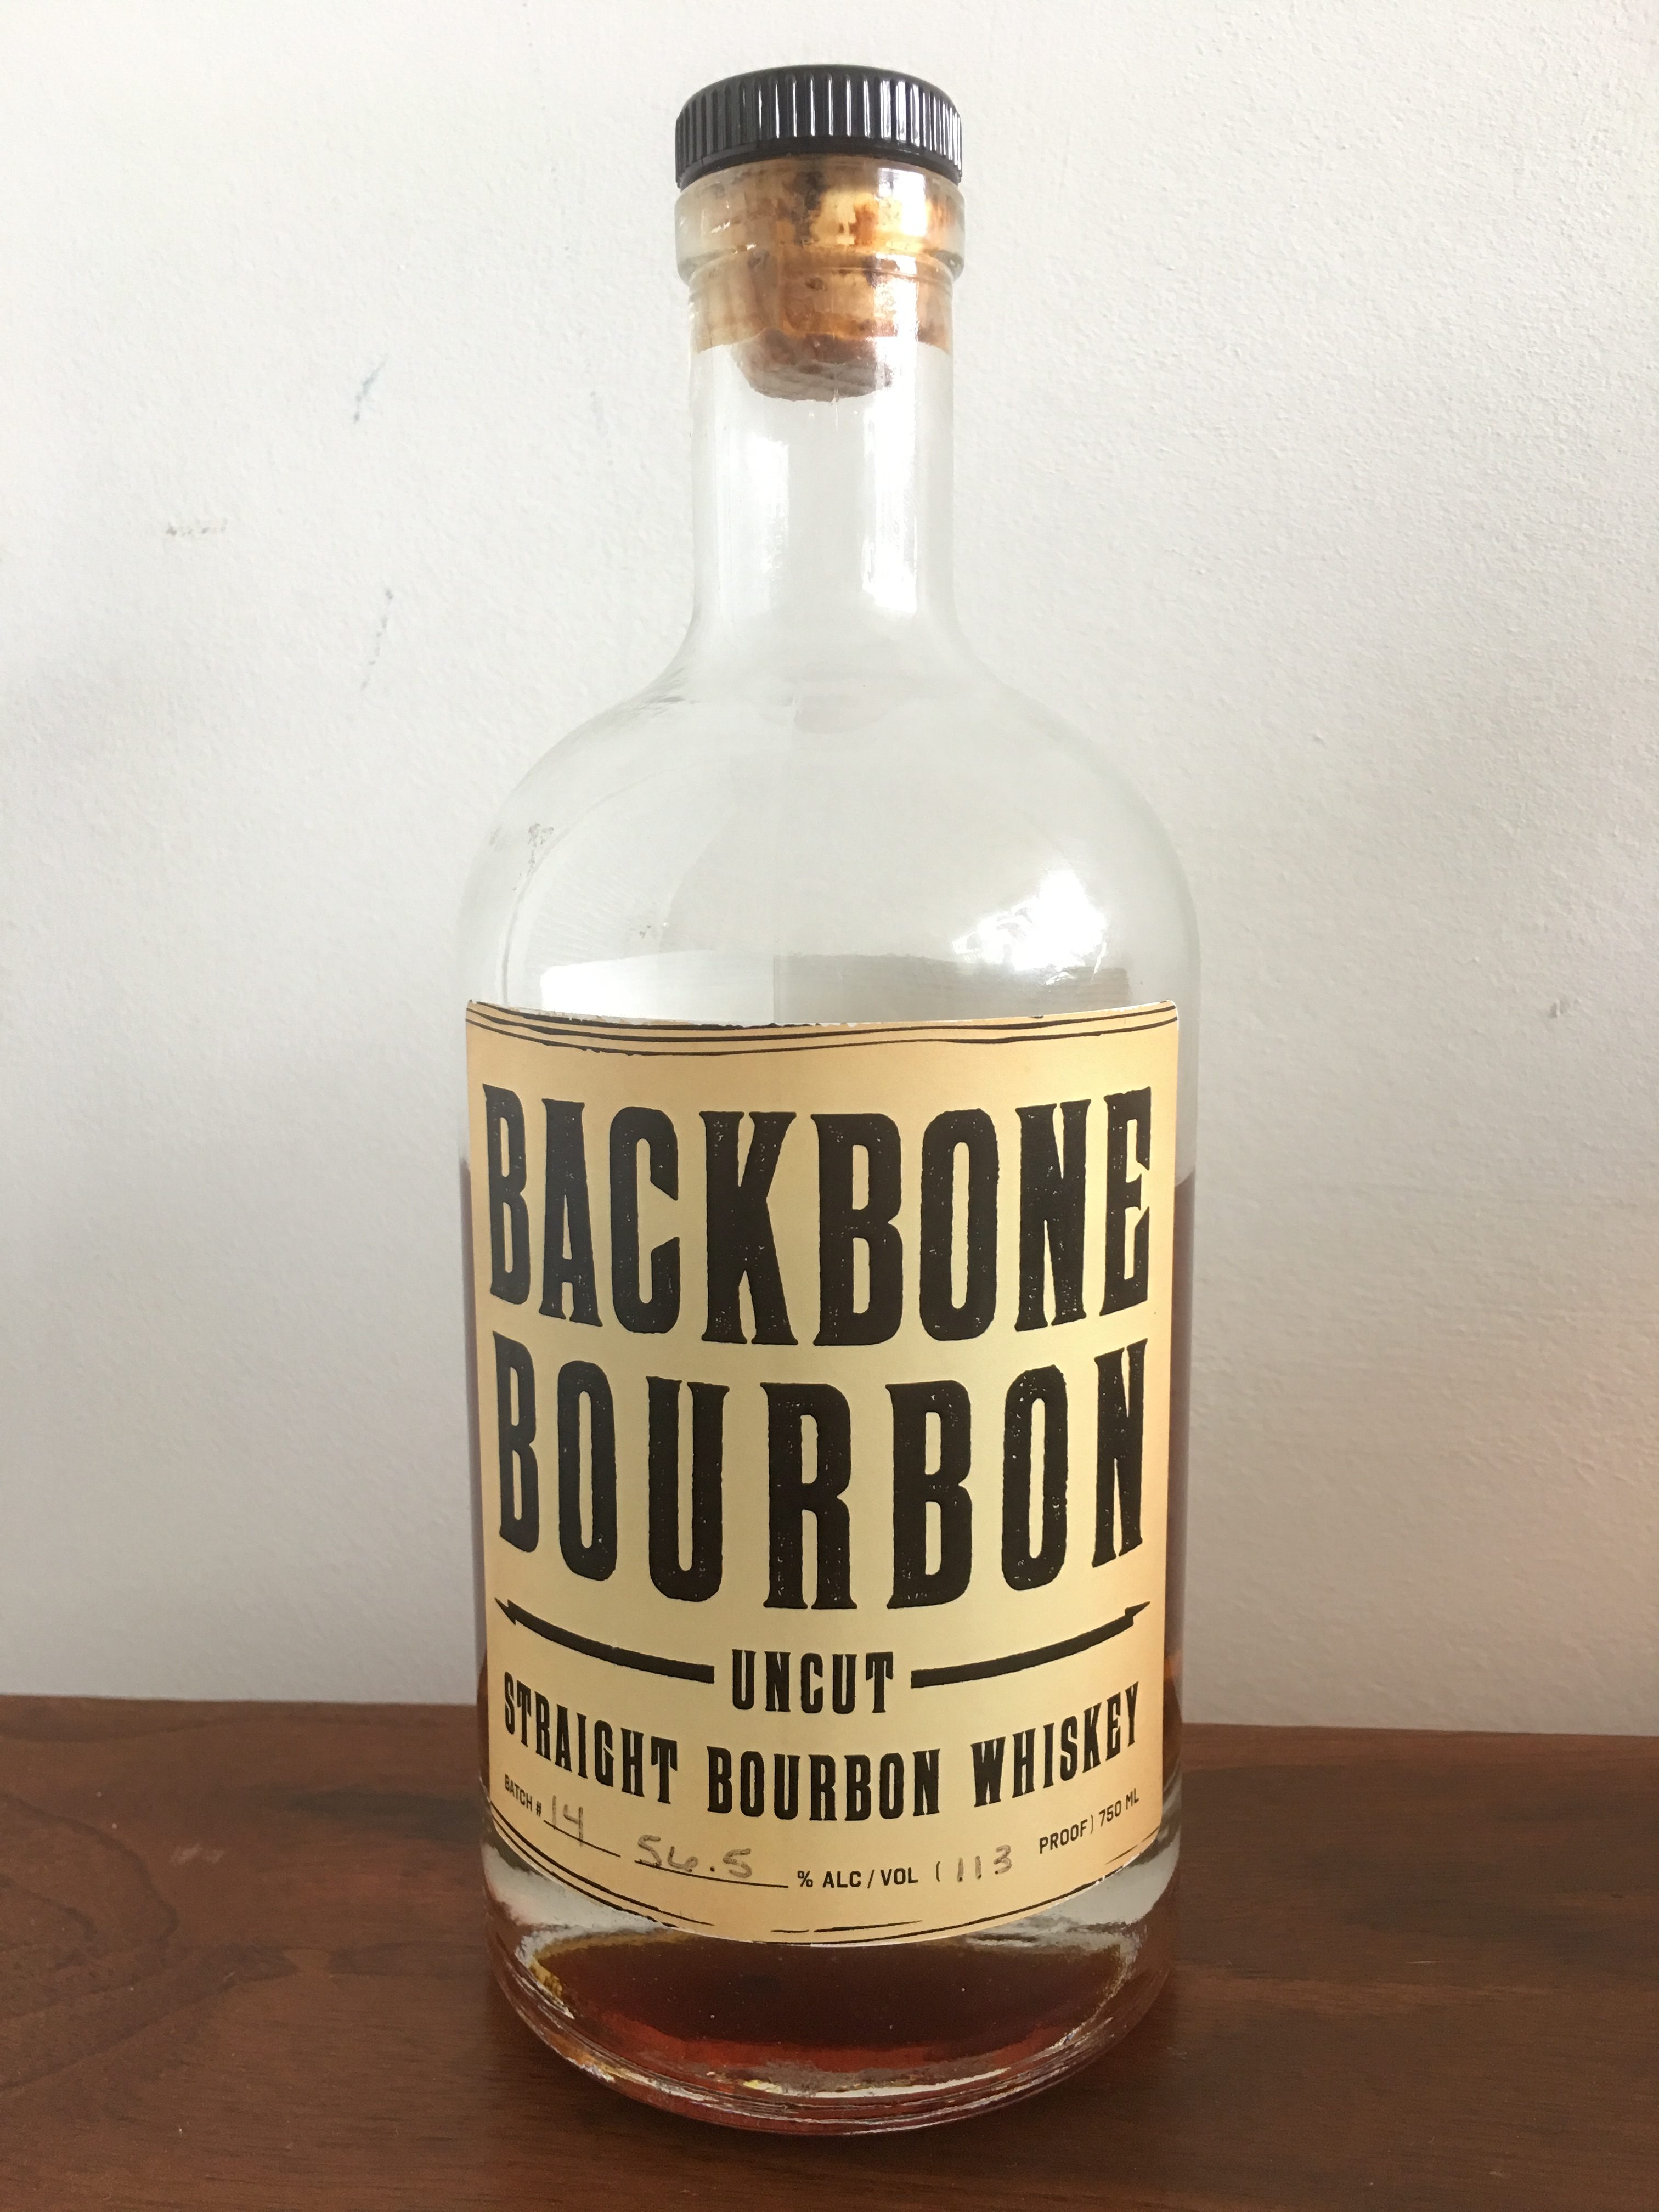 backbone bourbon prime back label